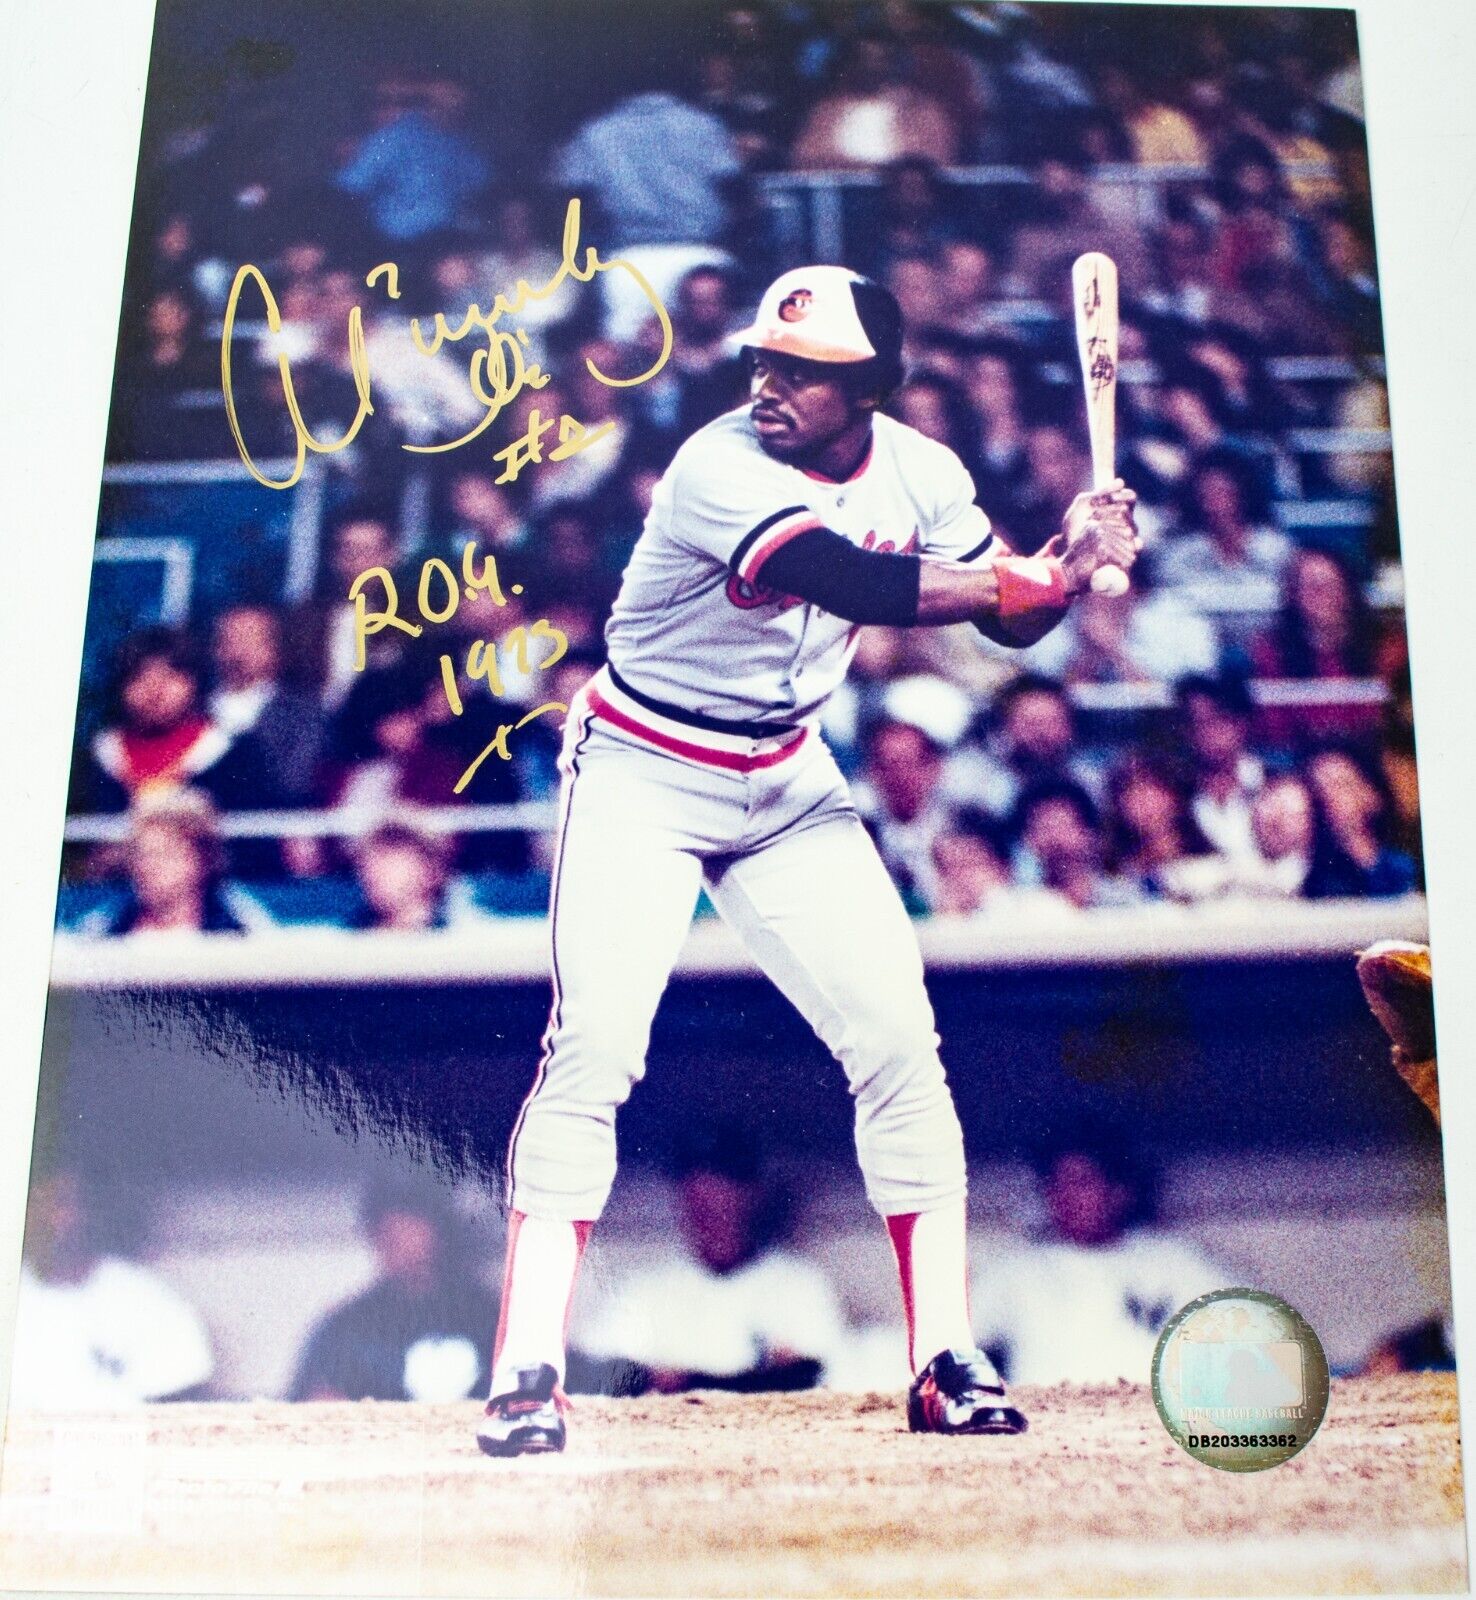 Al Bumbry Signed Autograph 8x10 Photo ROY 1973 Inscribed Baltimore Orioles HOF